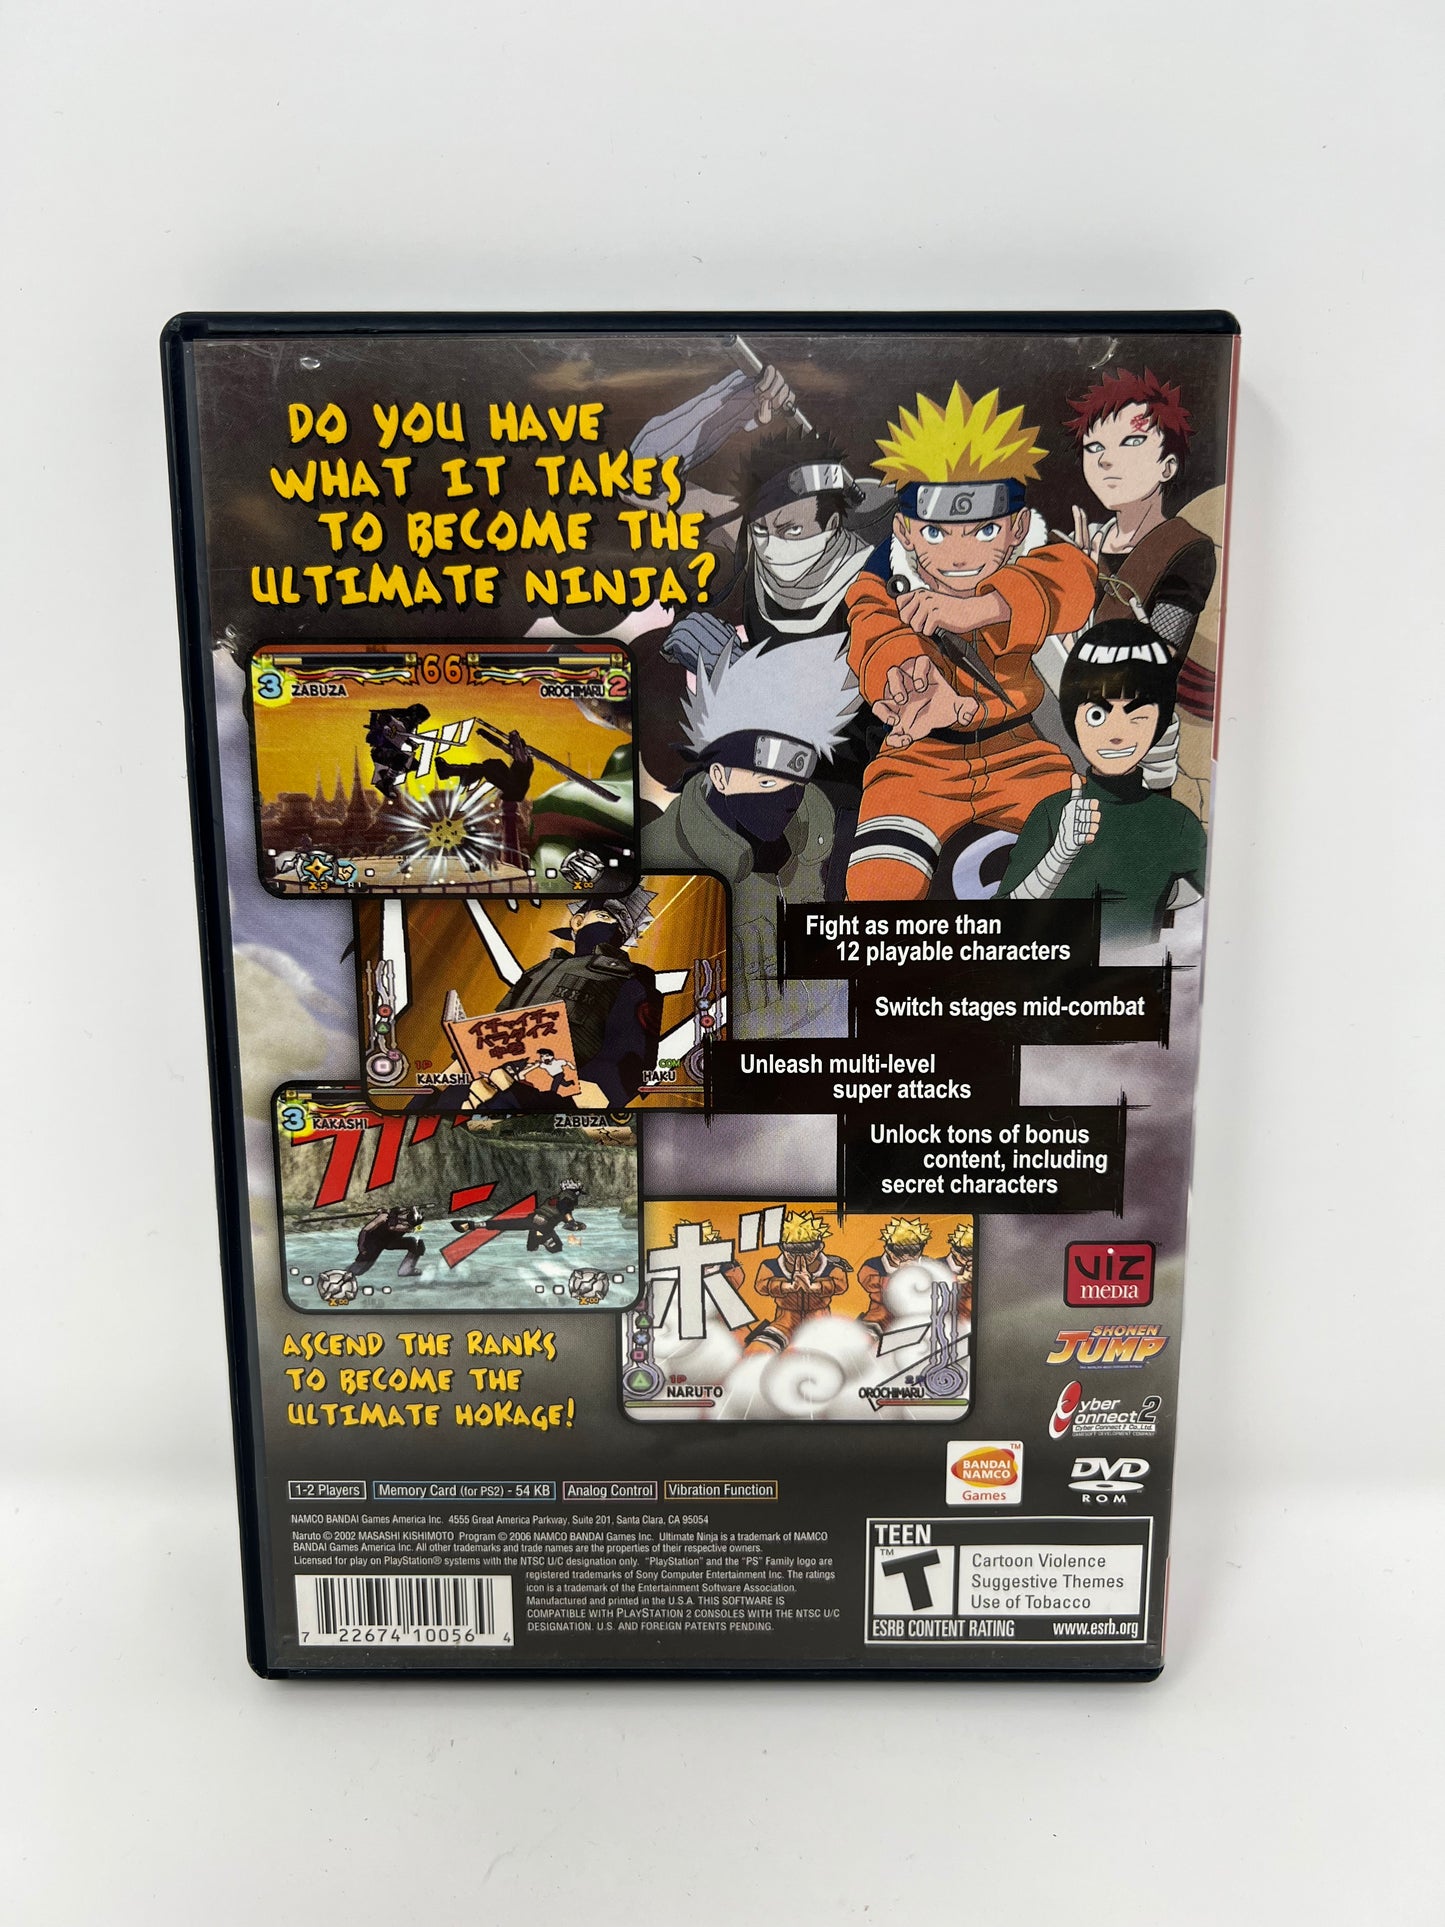 Shonen Jump Naruto Ultimate Ninja - PS2 Game - Used